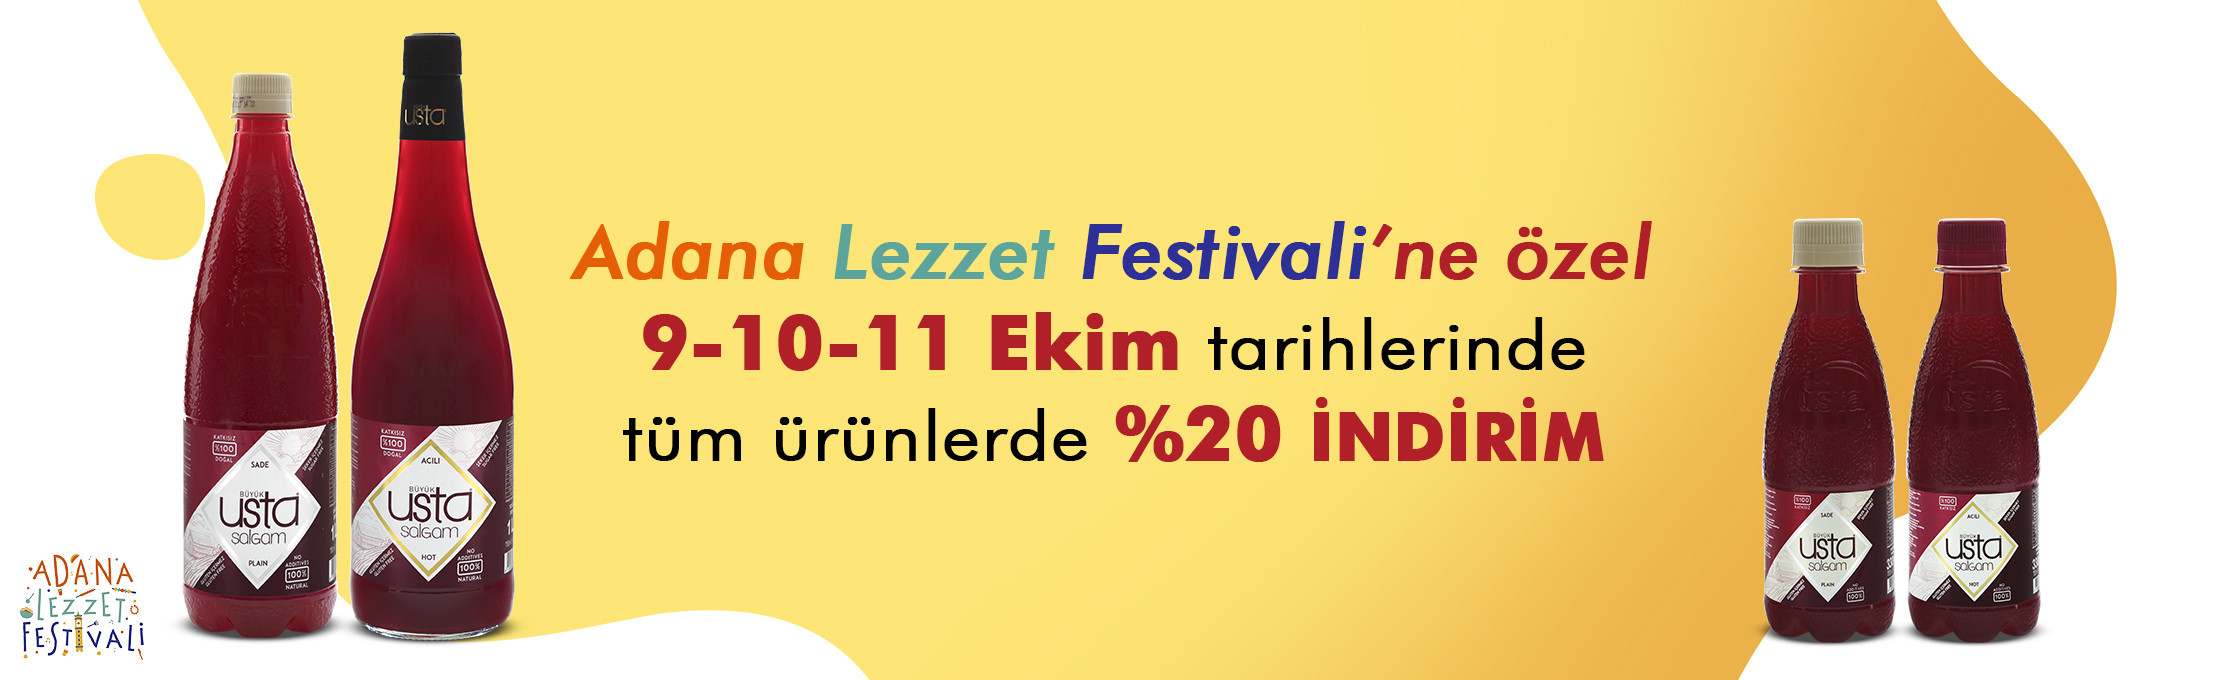 Adana Lezzet Festivali 2020